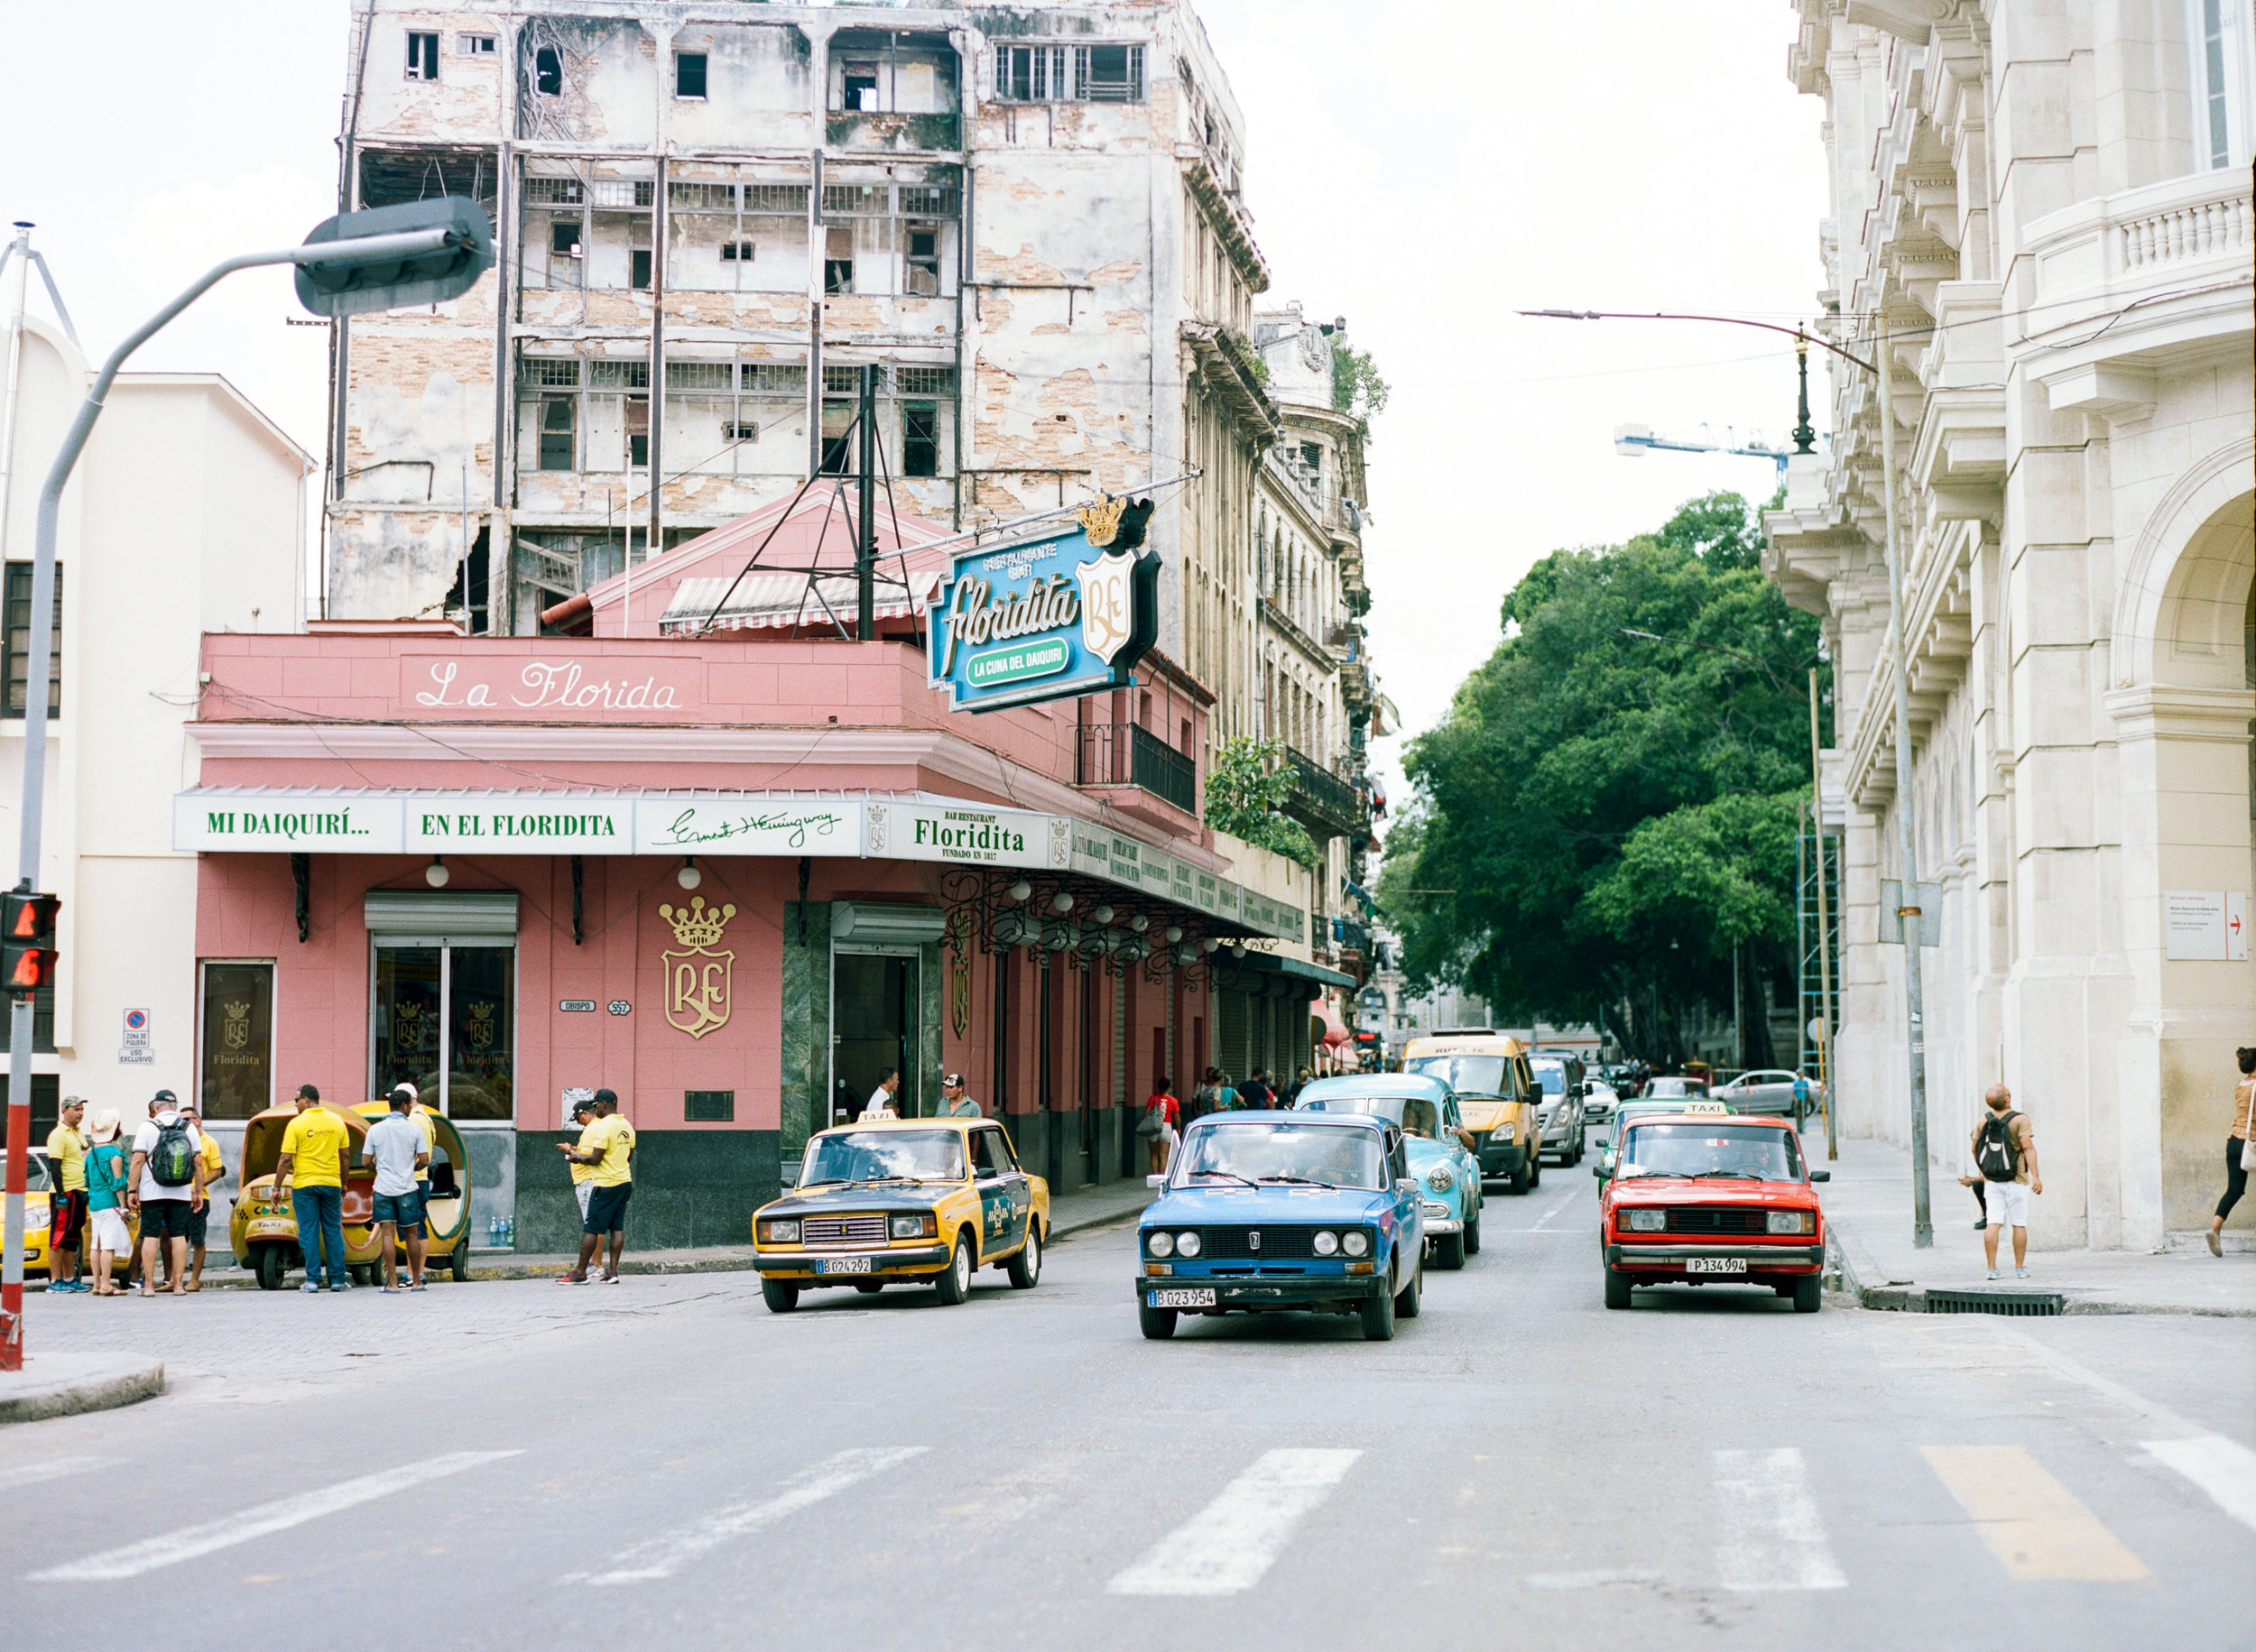 Cuba-Travel-photography-rachael-mcitnosh-photography-41.jpg